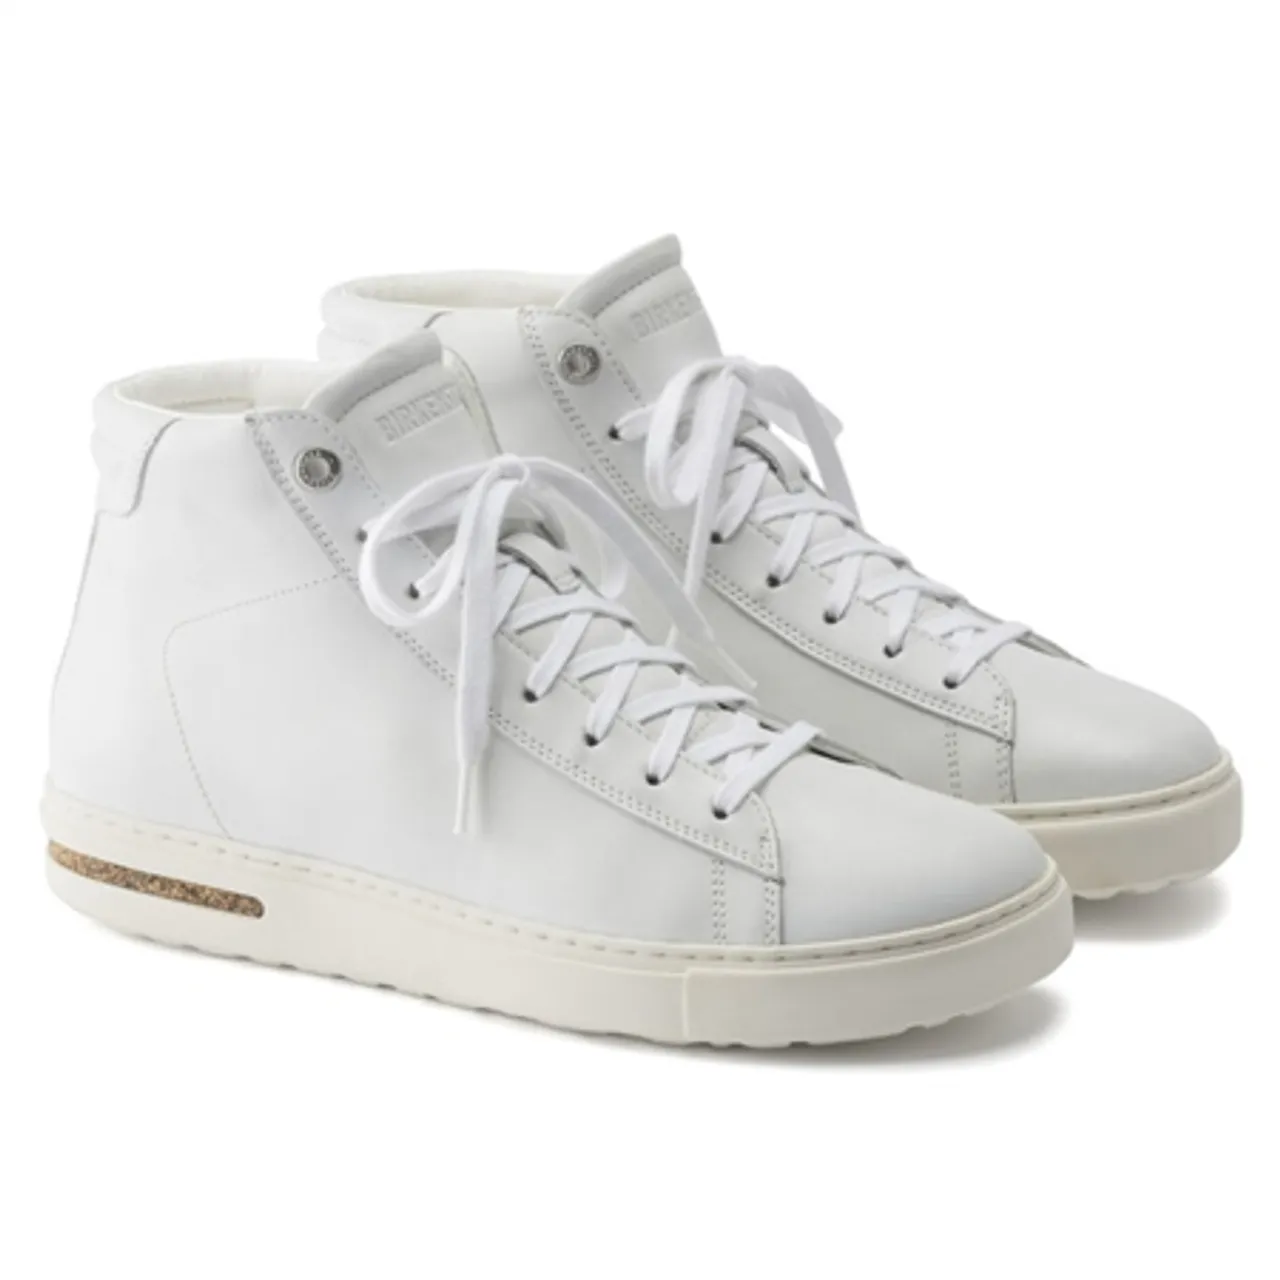 Birkenstock Bend Mid Shoes - White - UK 5.5 (EU 39)